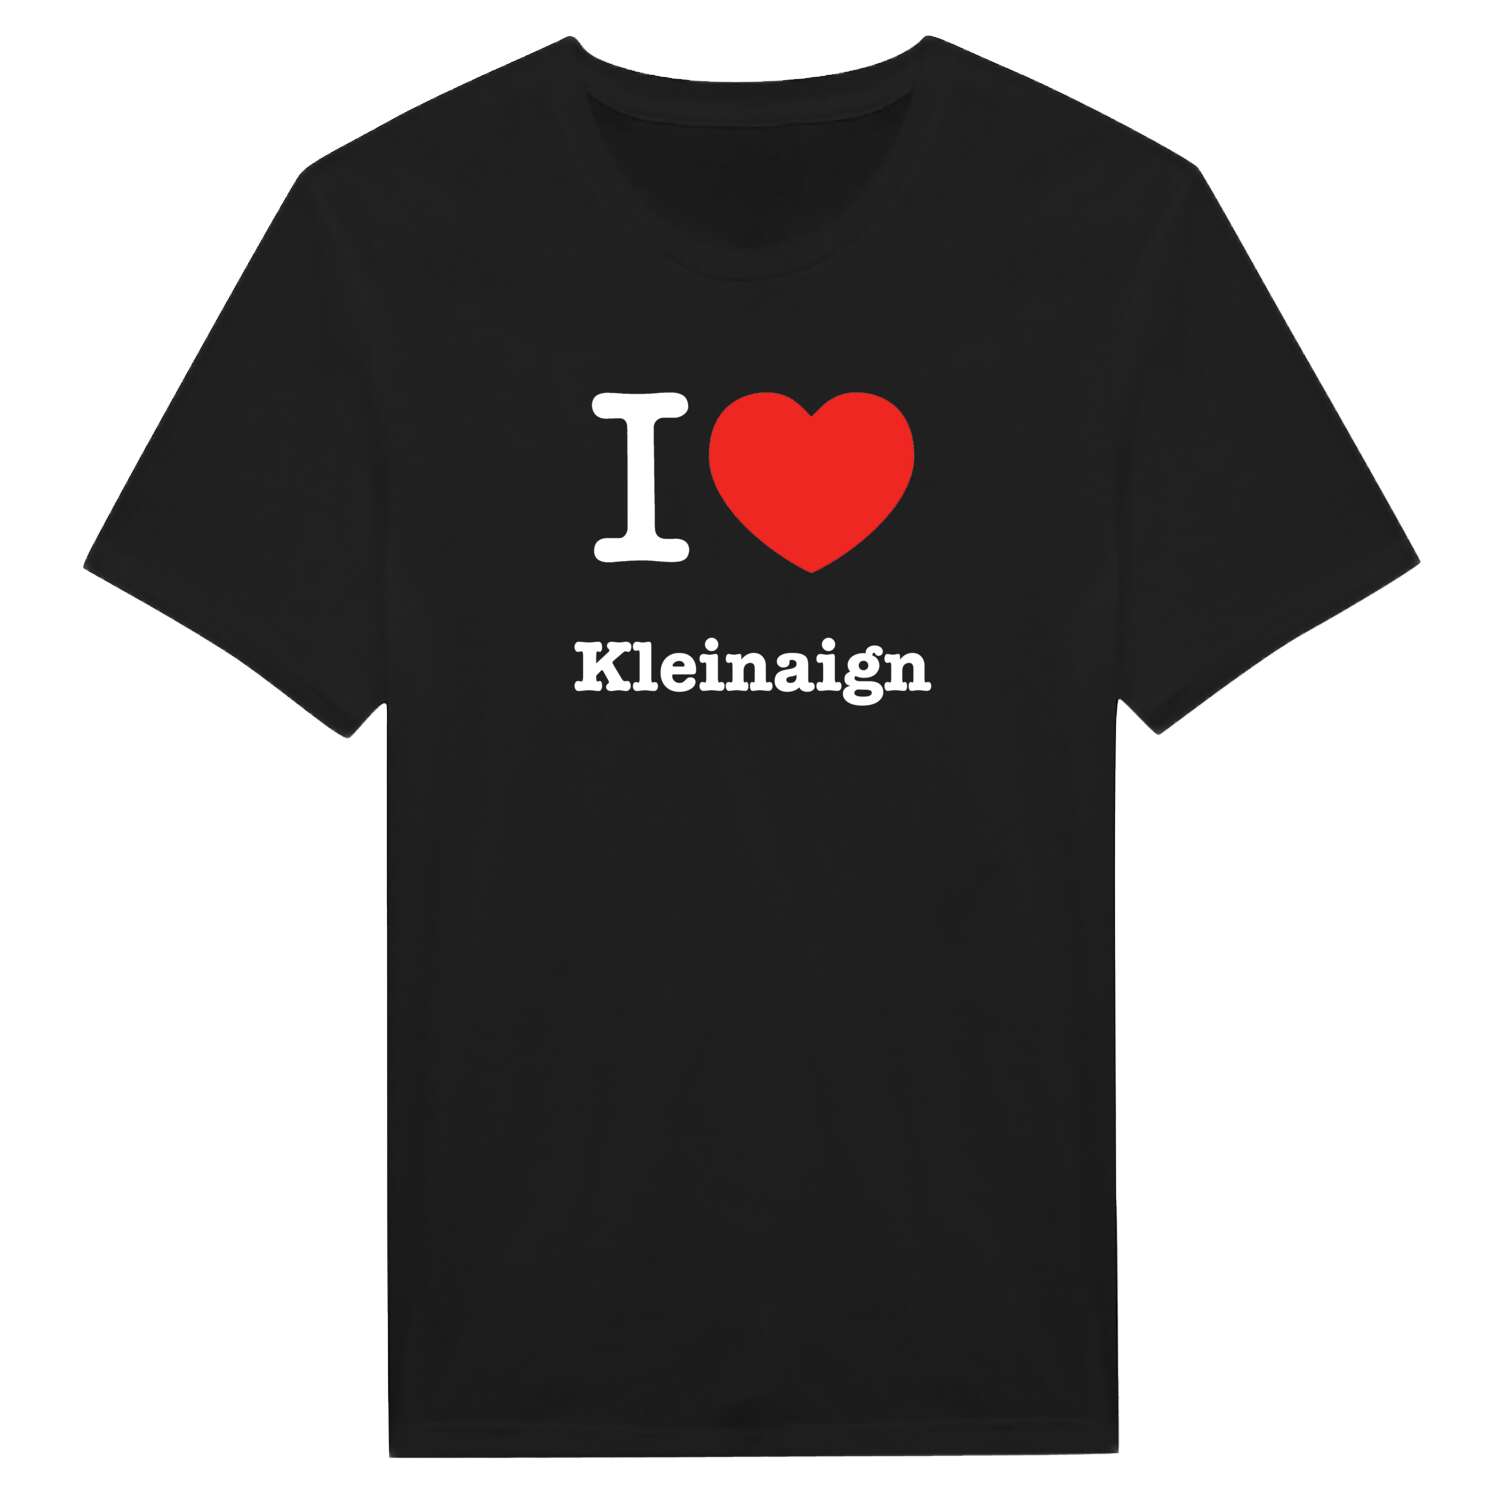 Kleinaign T-Shirt »I love«